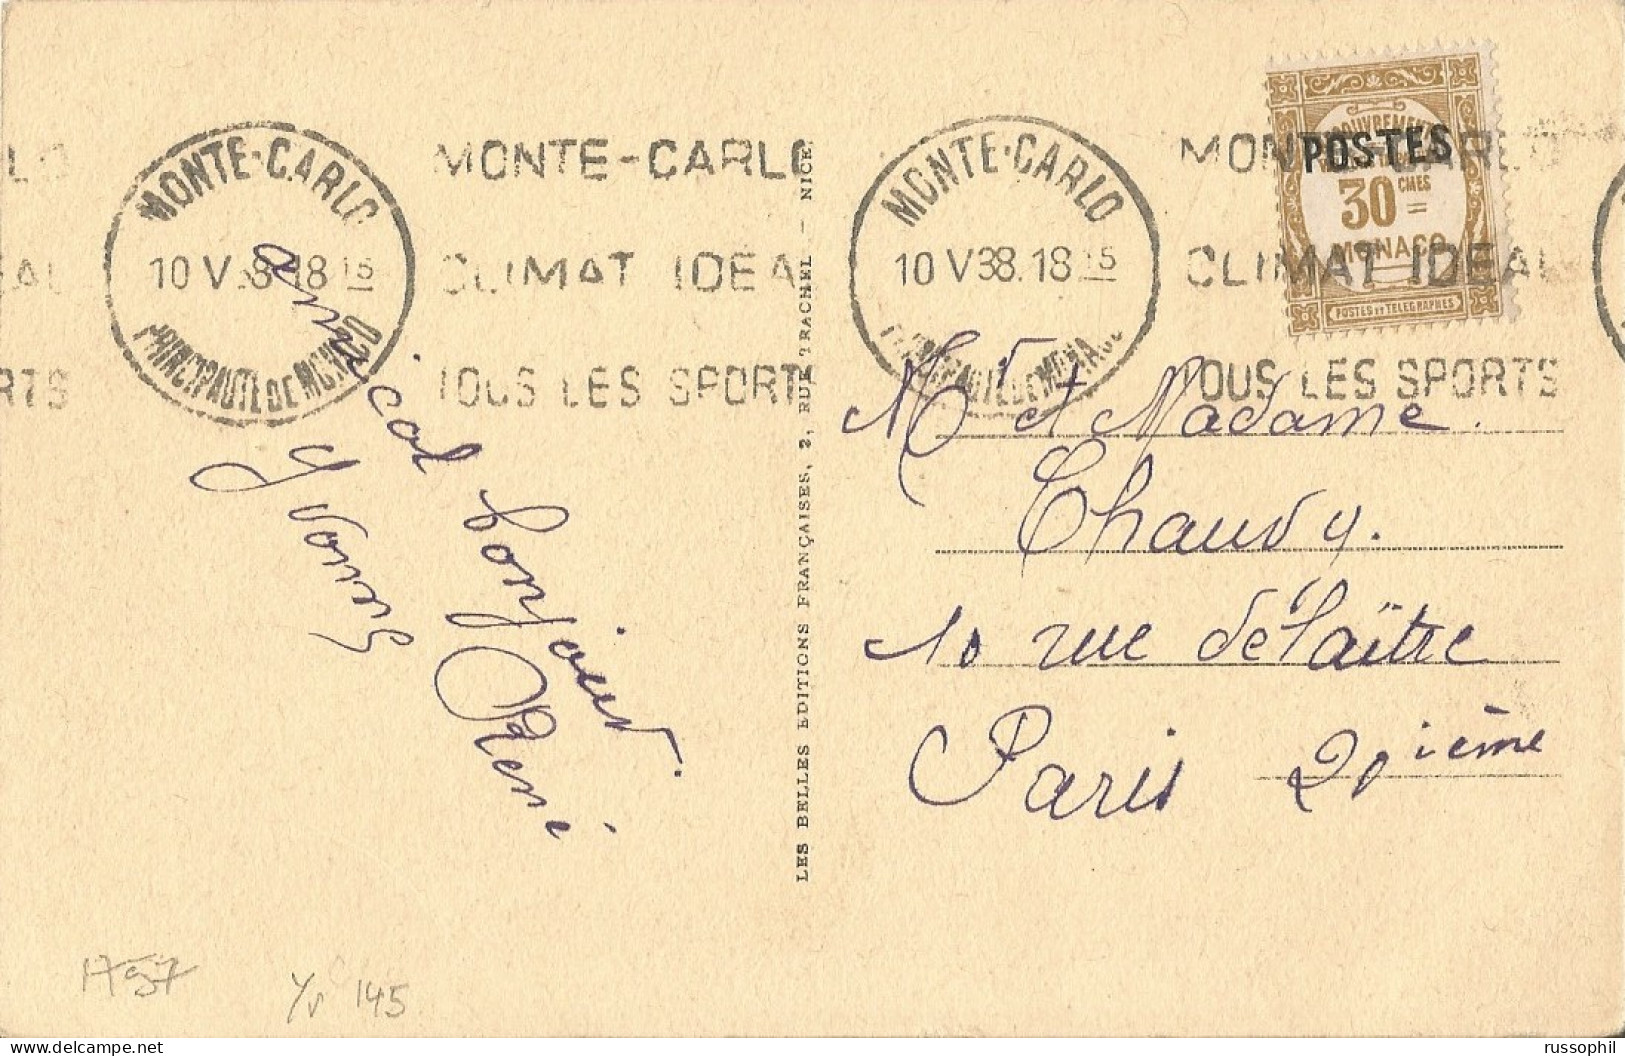 MONACO - Yv #145  ALONE FRANKING PC (VIEW OF MONACO) TO PARIS - 1938  - Covers & Documents